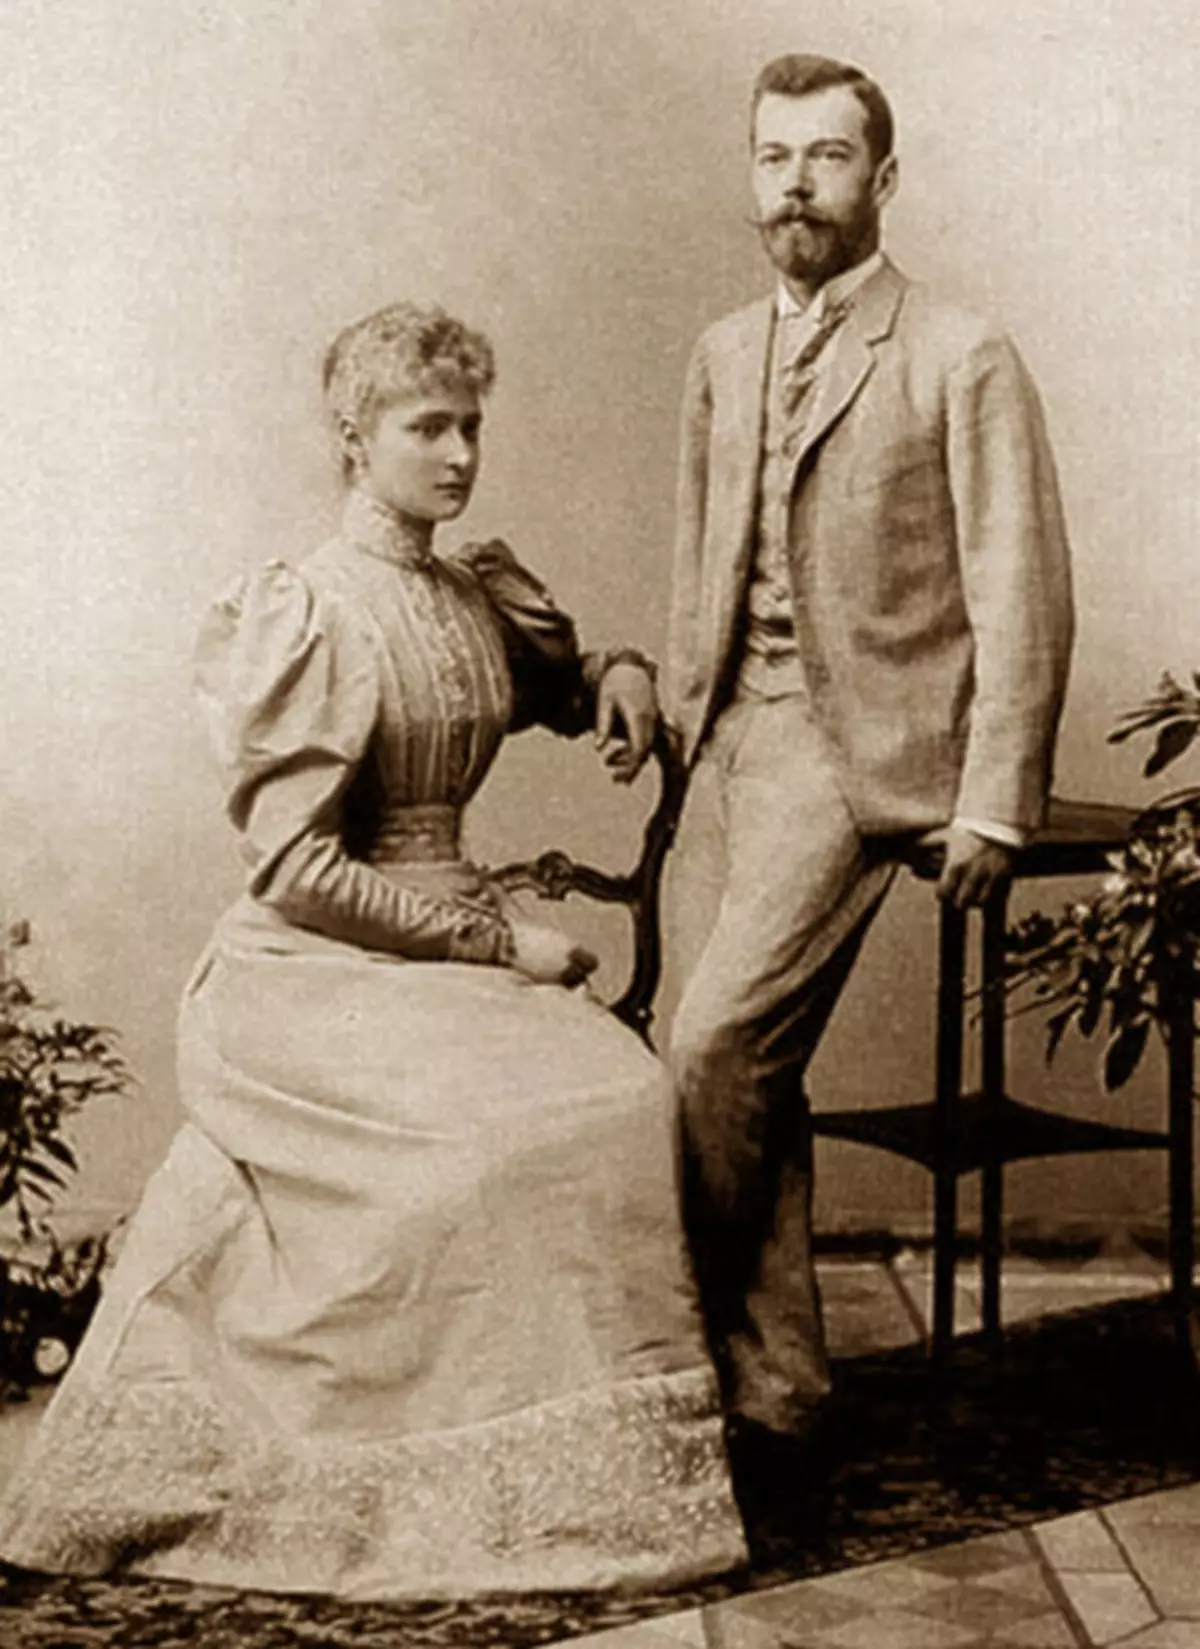 Zesarevich Nikolai এবং Alisa হেসিয়ান engagement পরে